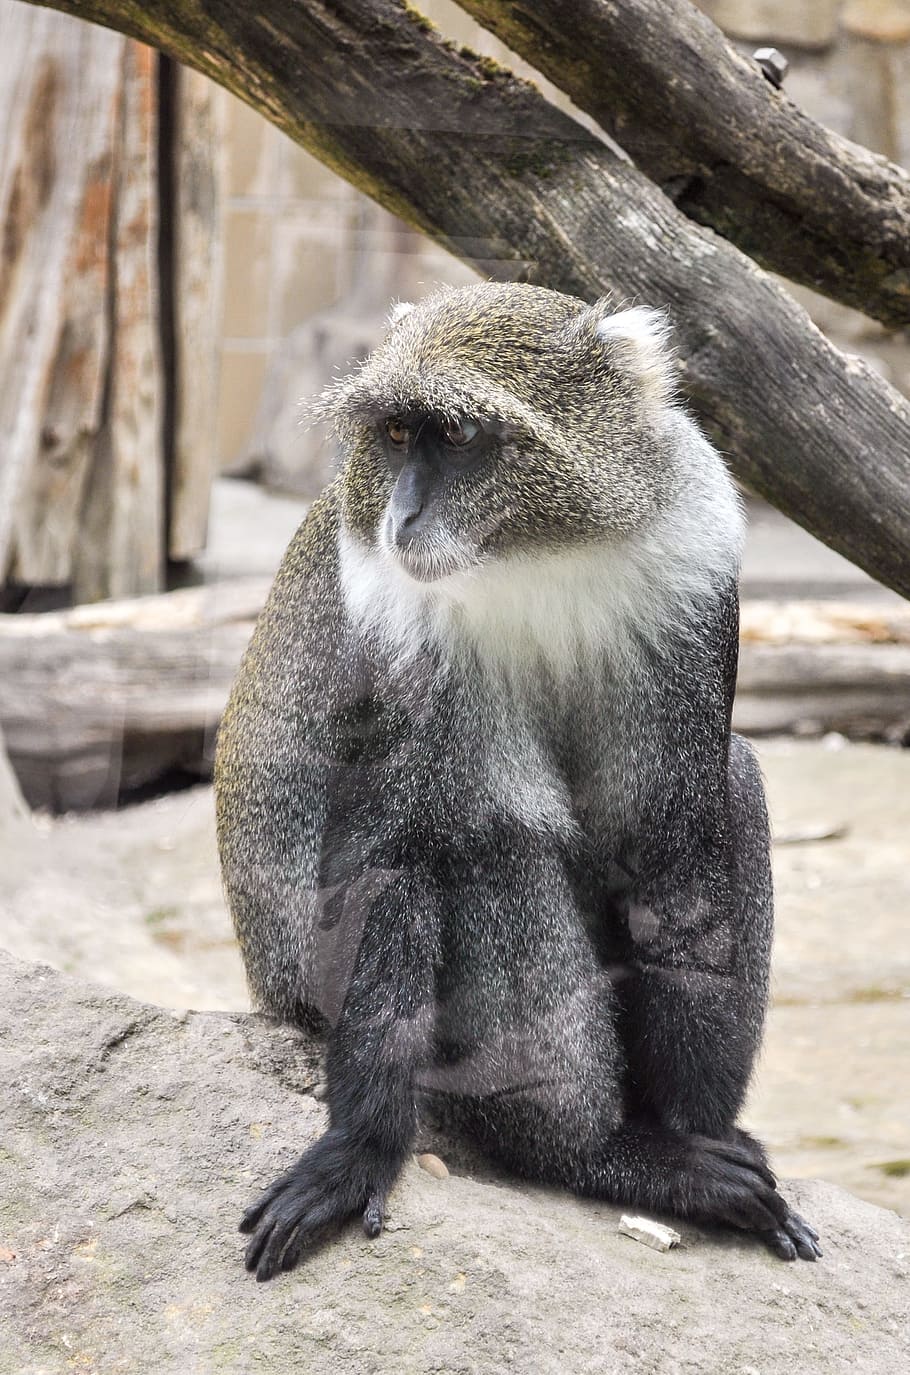 monkey, ape, zoo, animal, wildlife photography, primates, nature